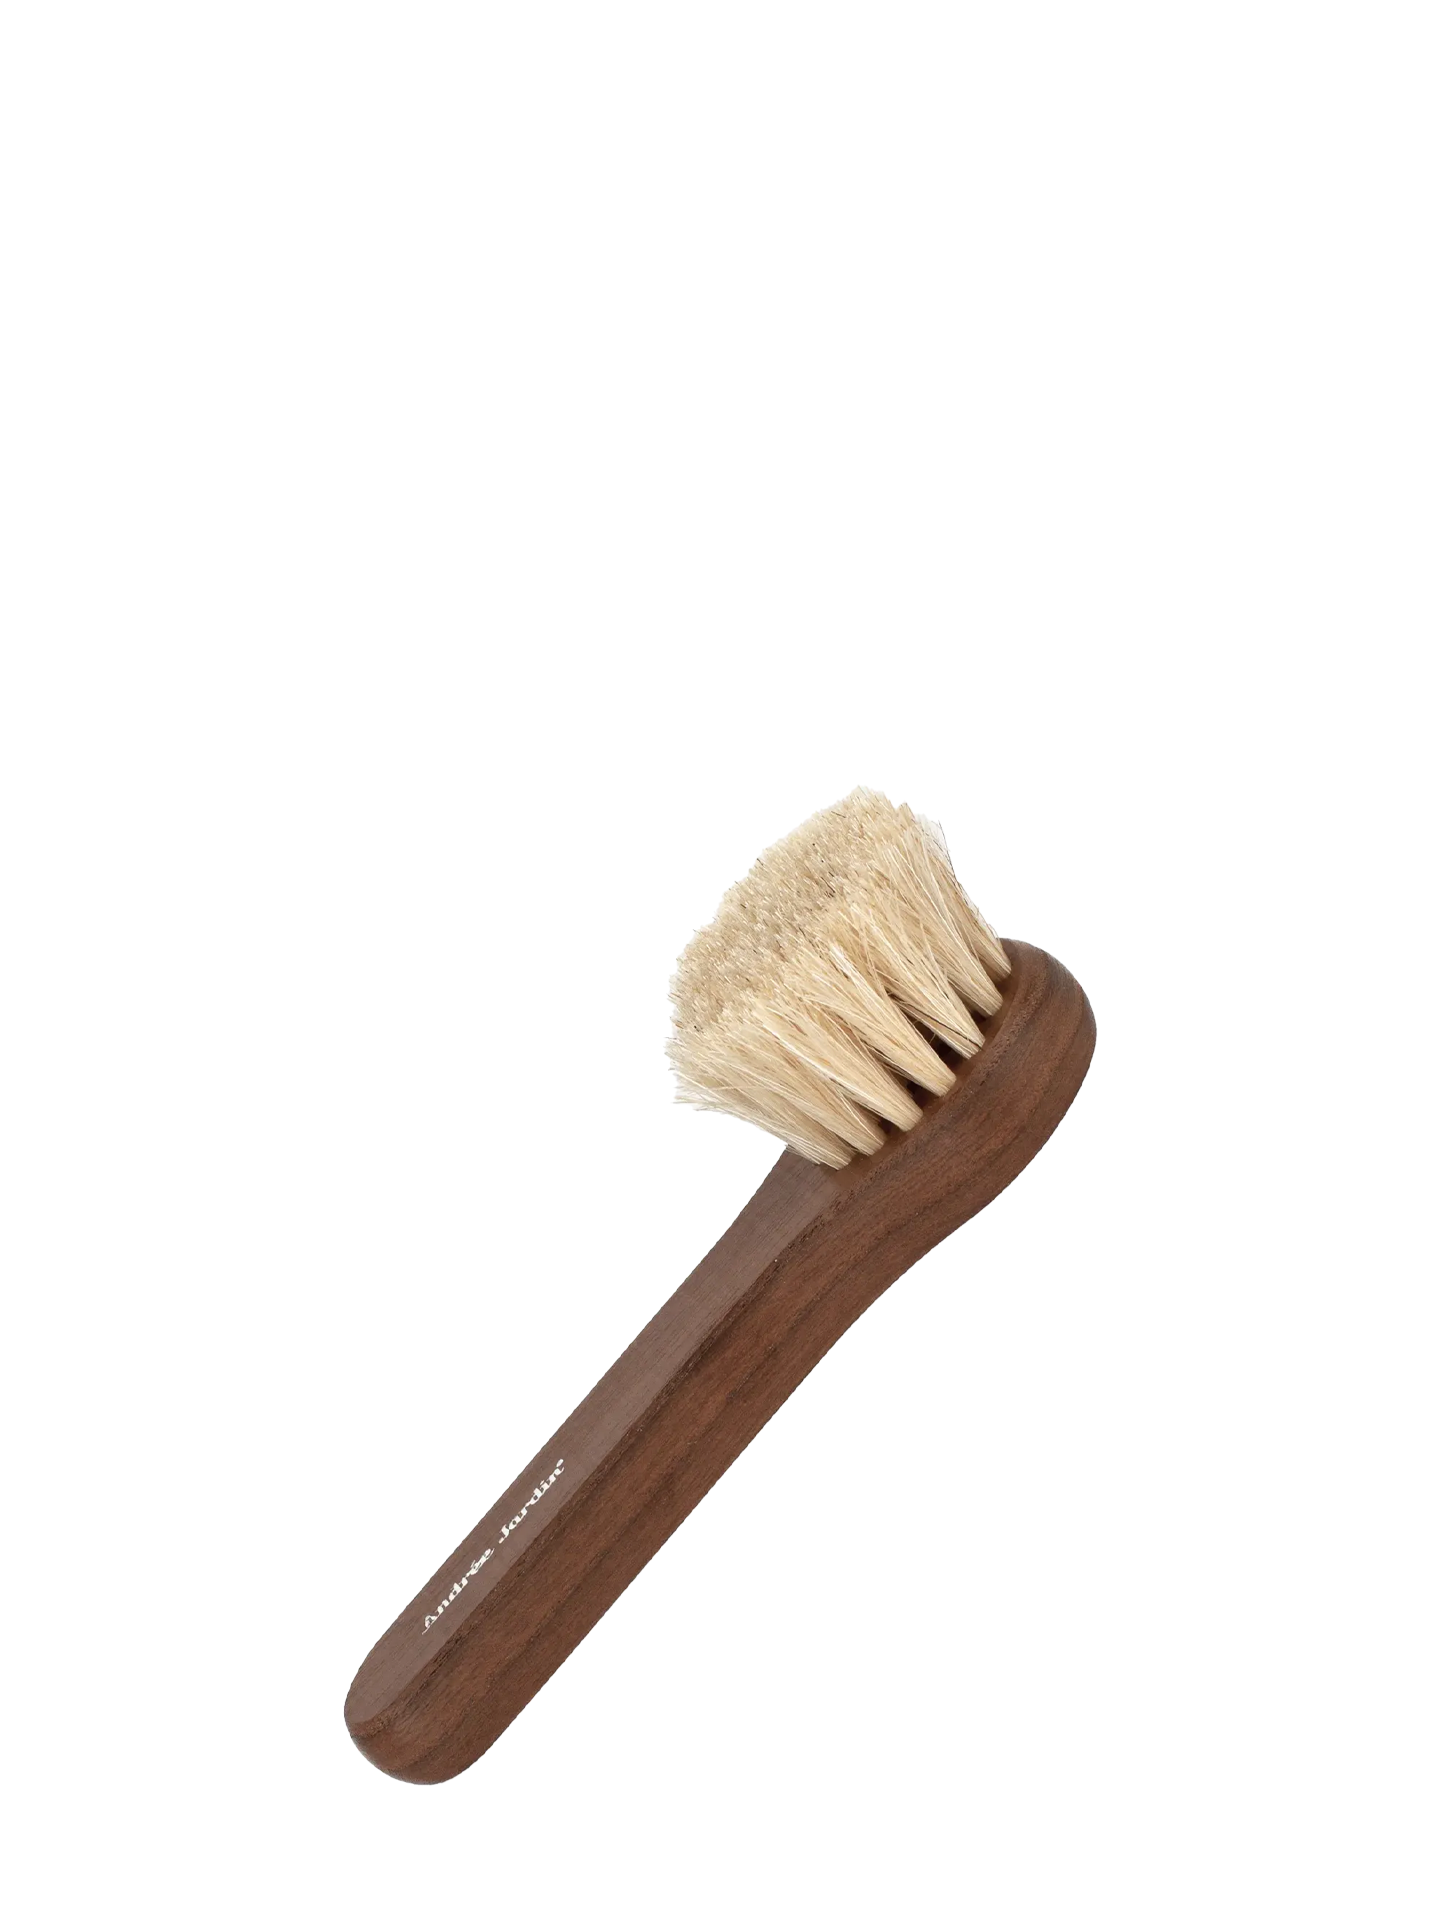 Scrub face cleansing brush, dark wood